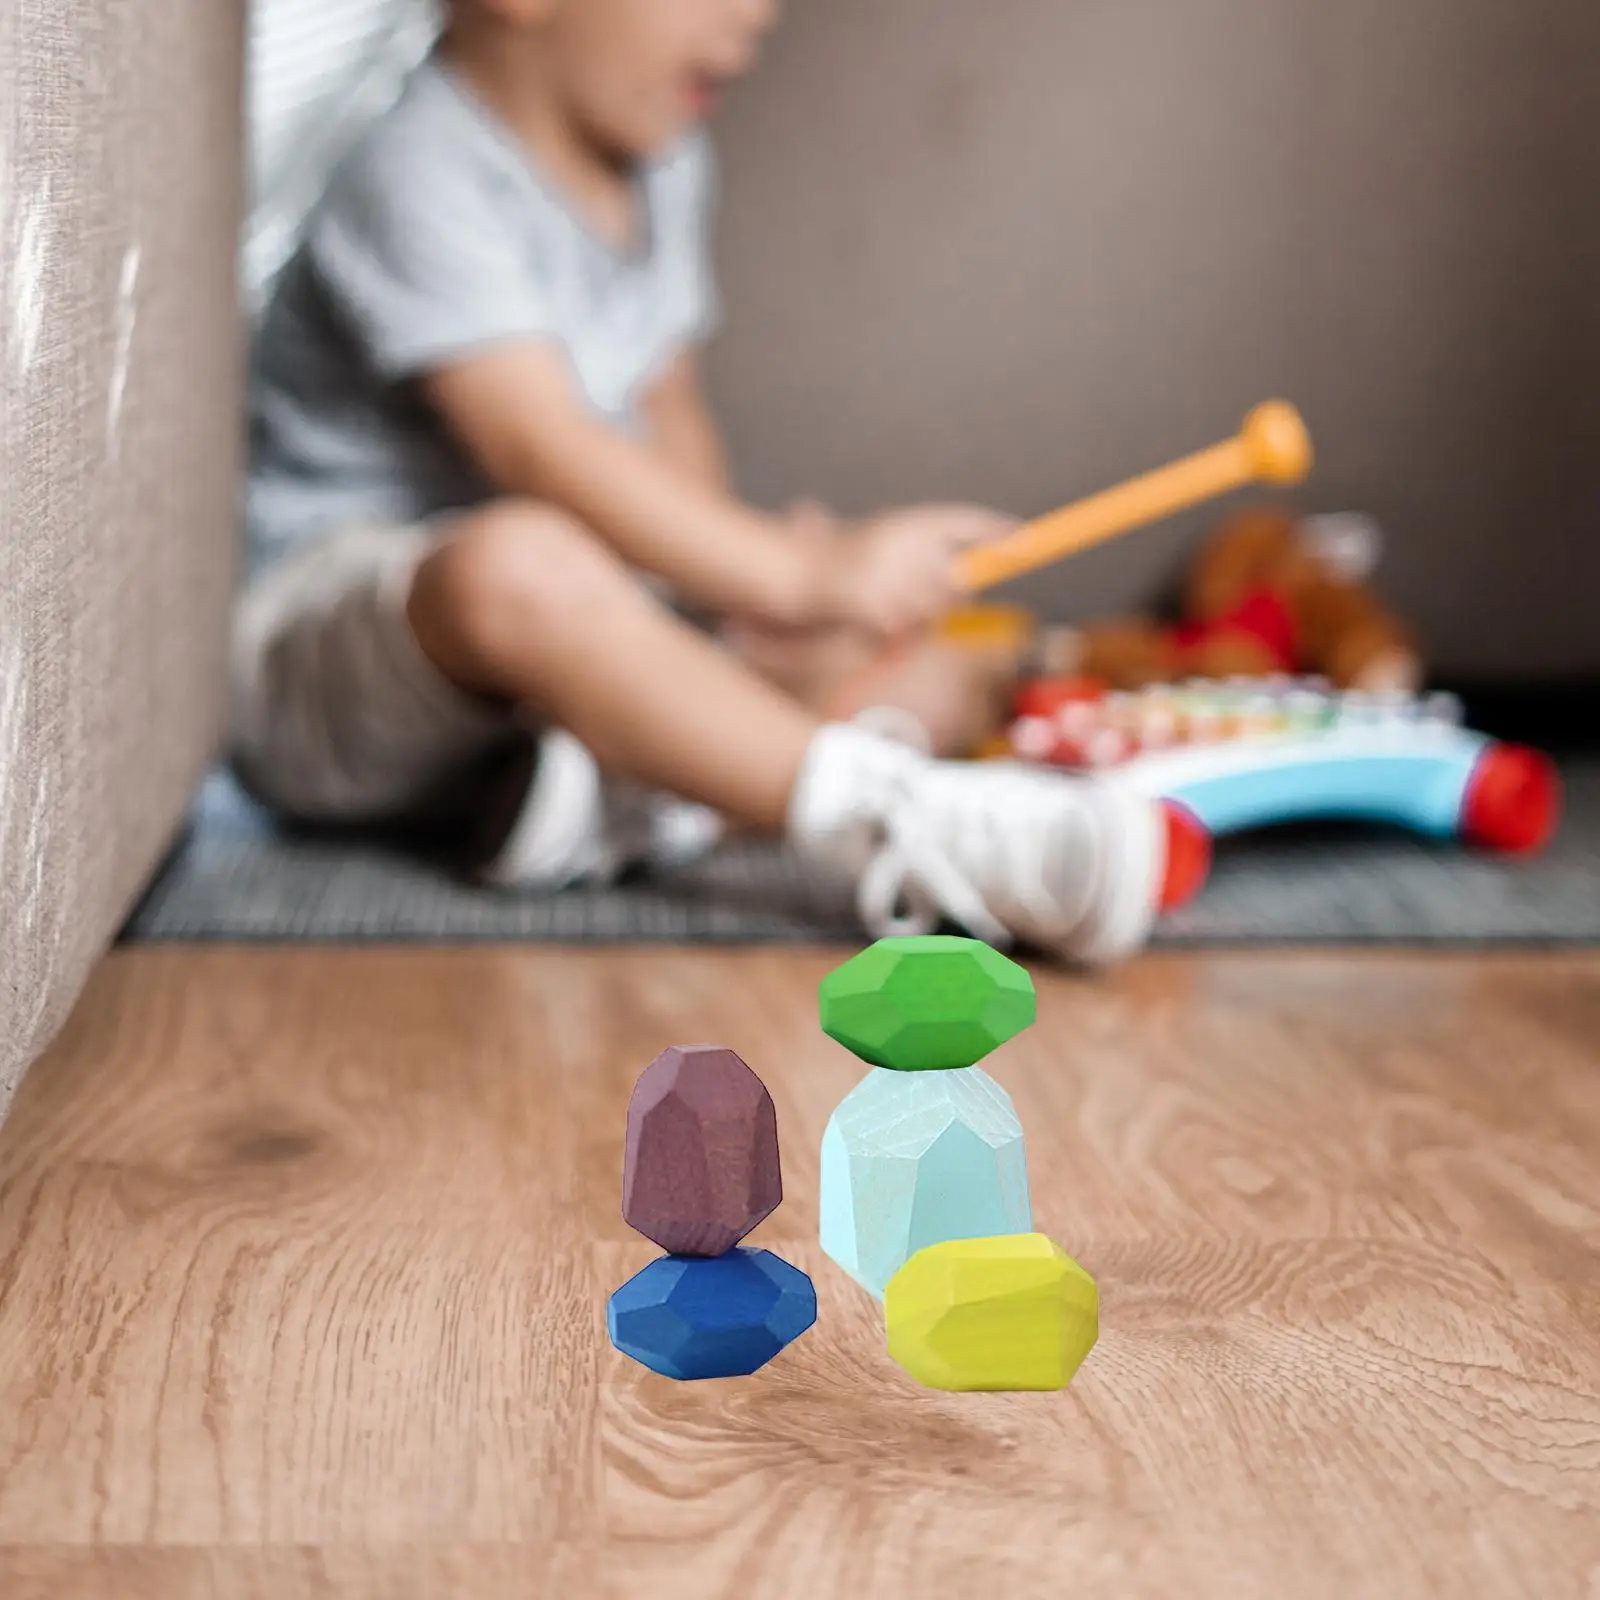 Wooden Balancing Stacking Bricks Montessori Light Educational Artware Puzzle Toy